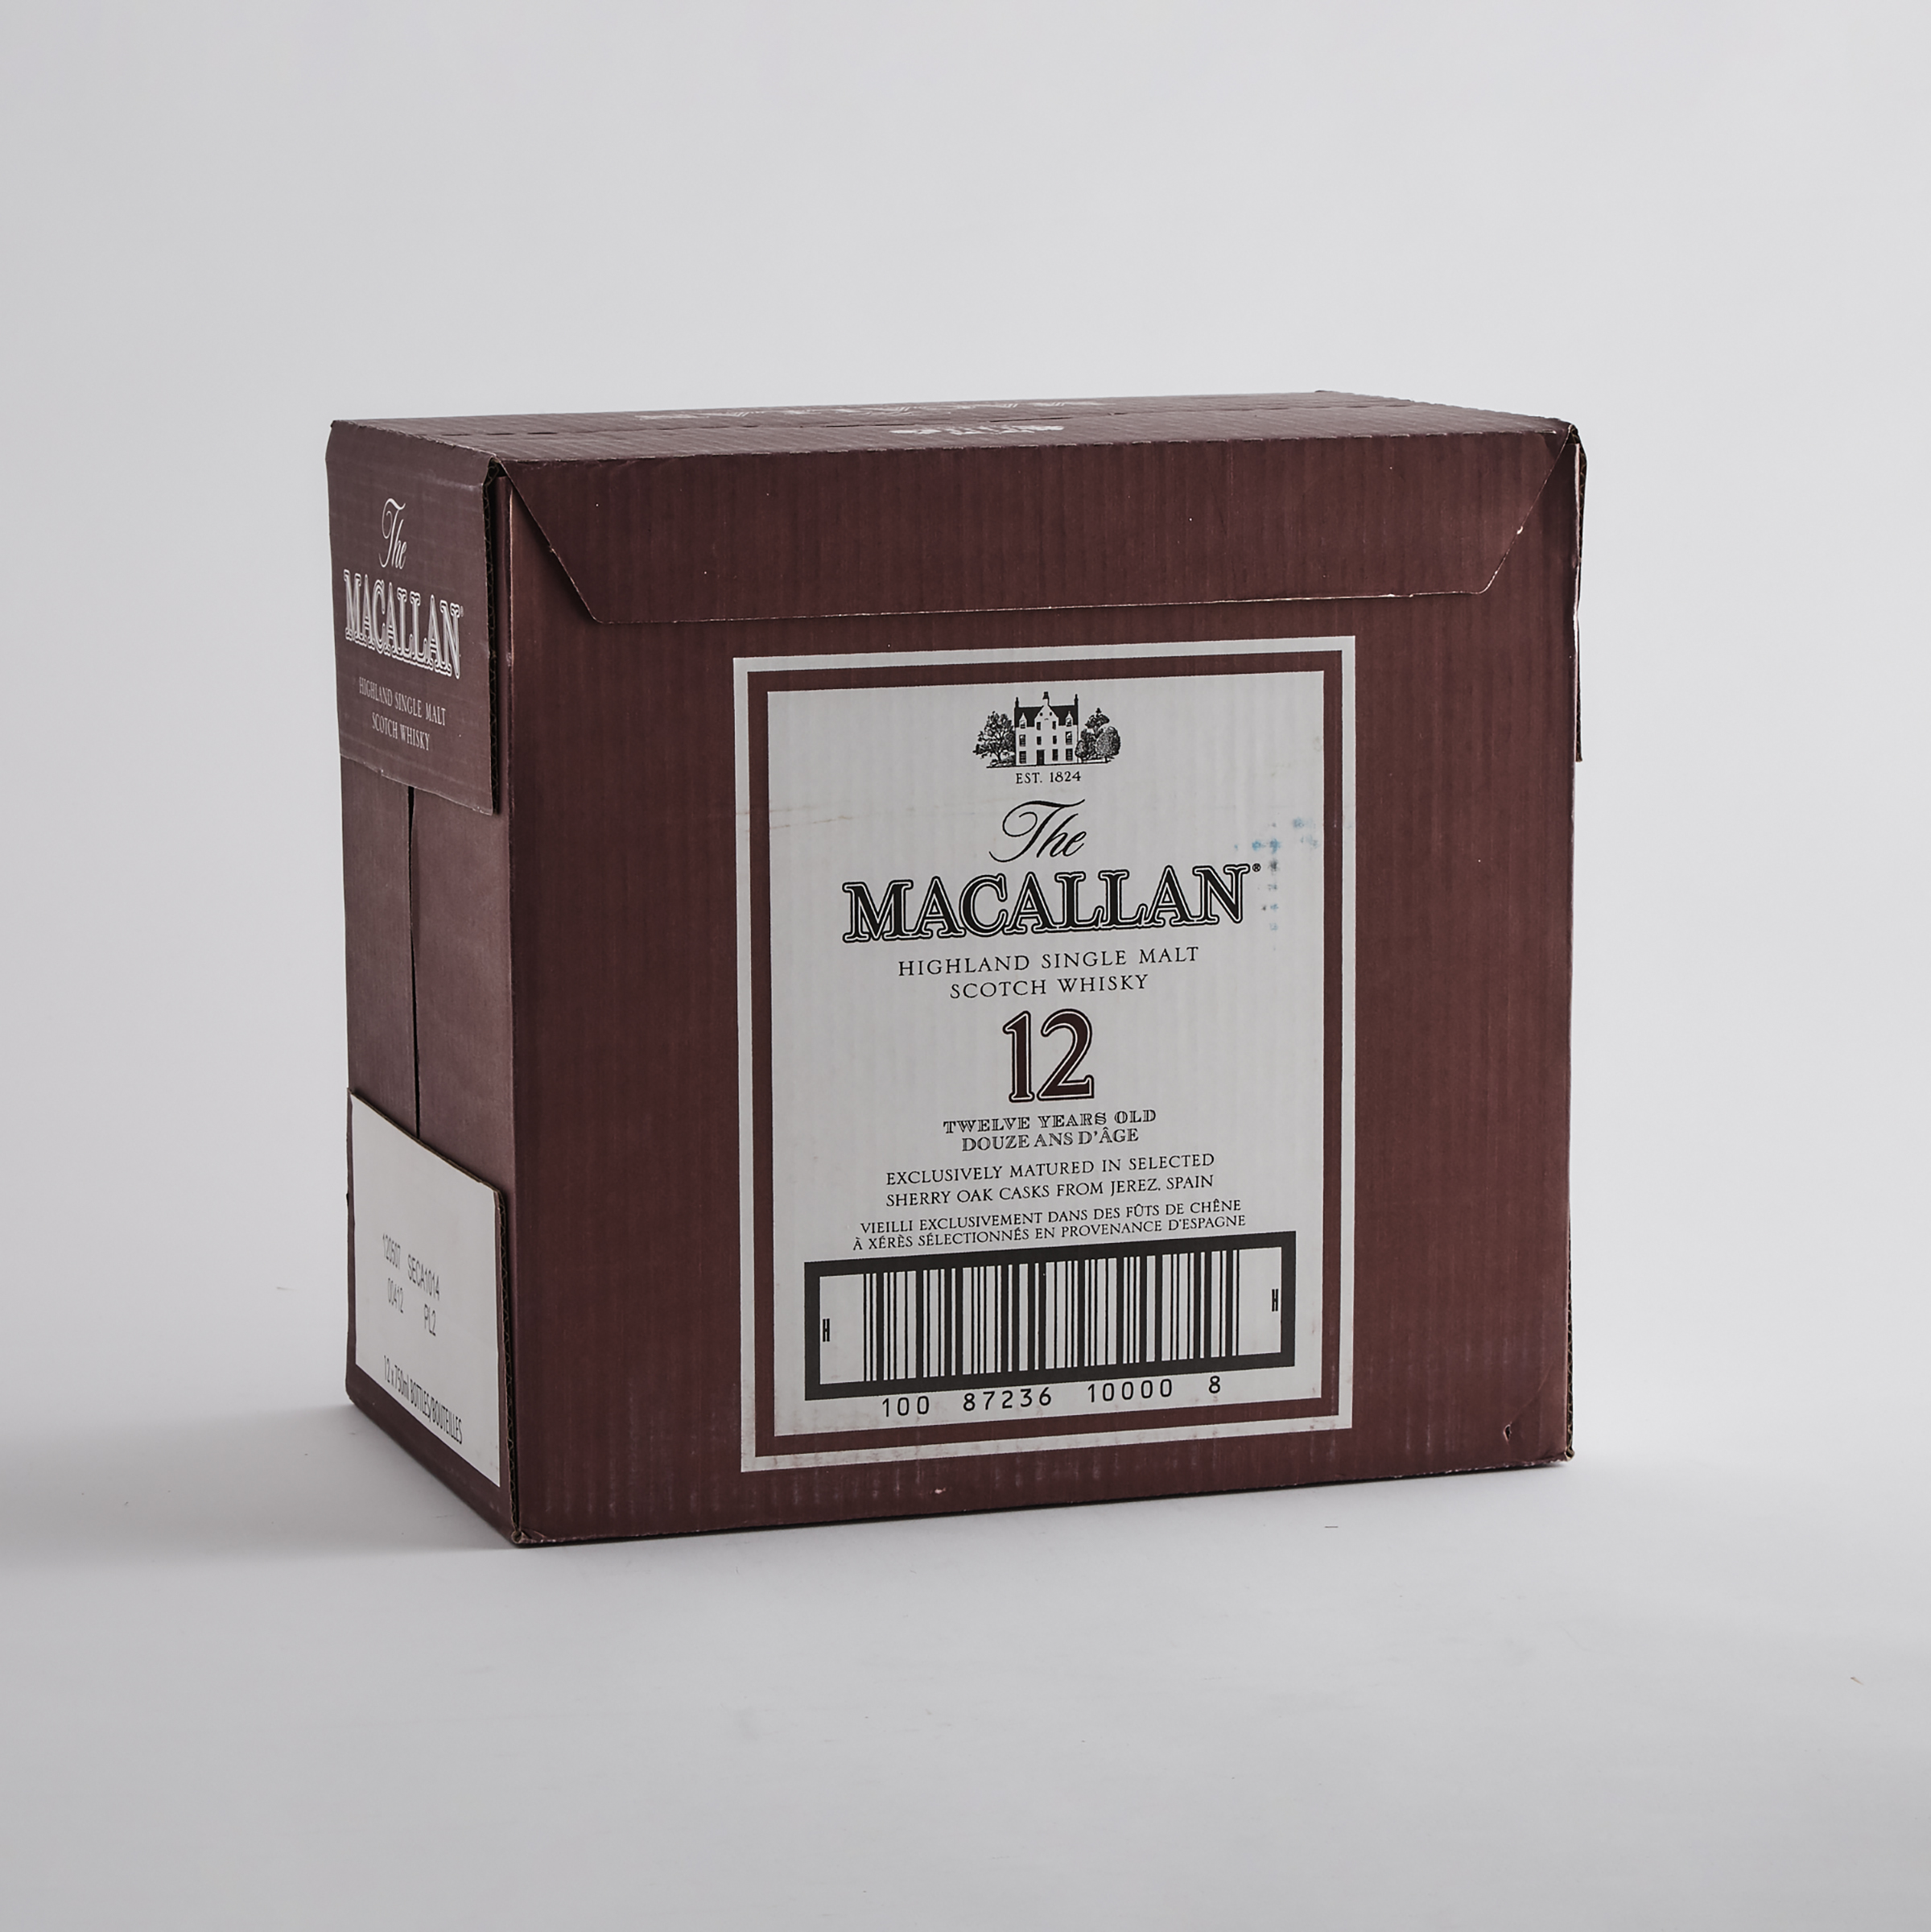 THE MACALLAN HIGHLAND SINGLE MALT SCOTCH WHISKY 12 YEARS (TWELVE 750 ML)